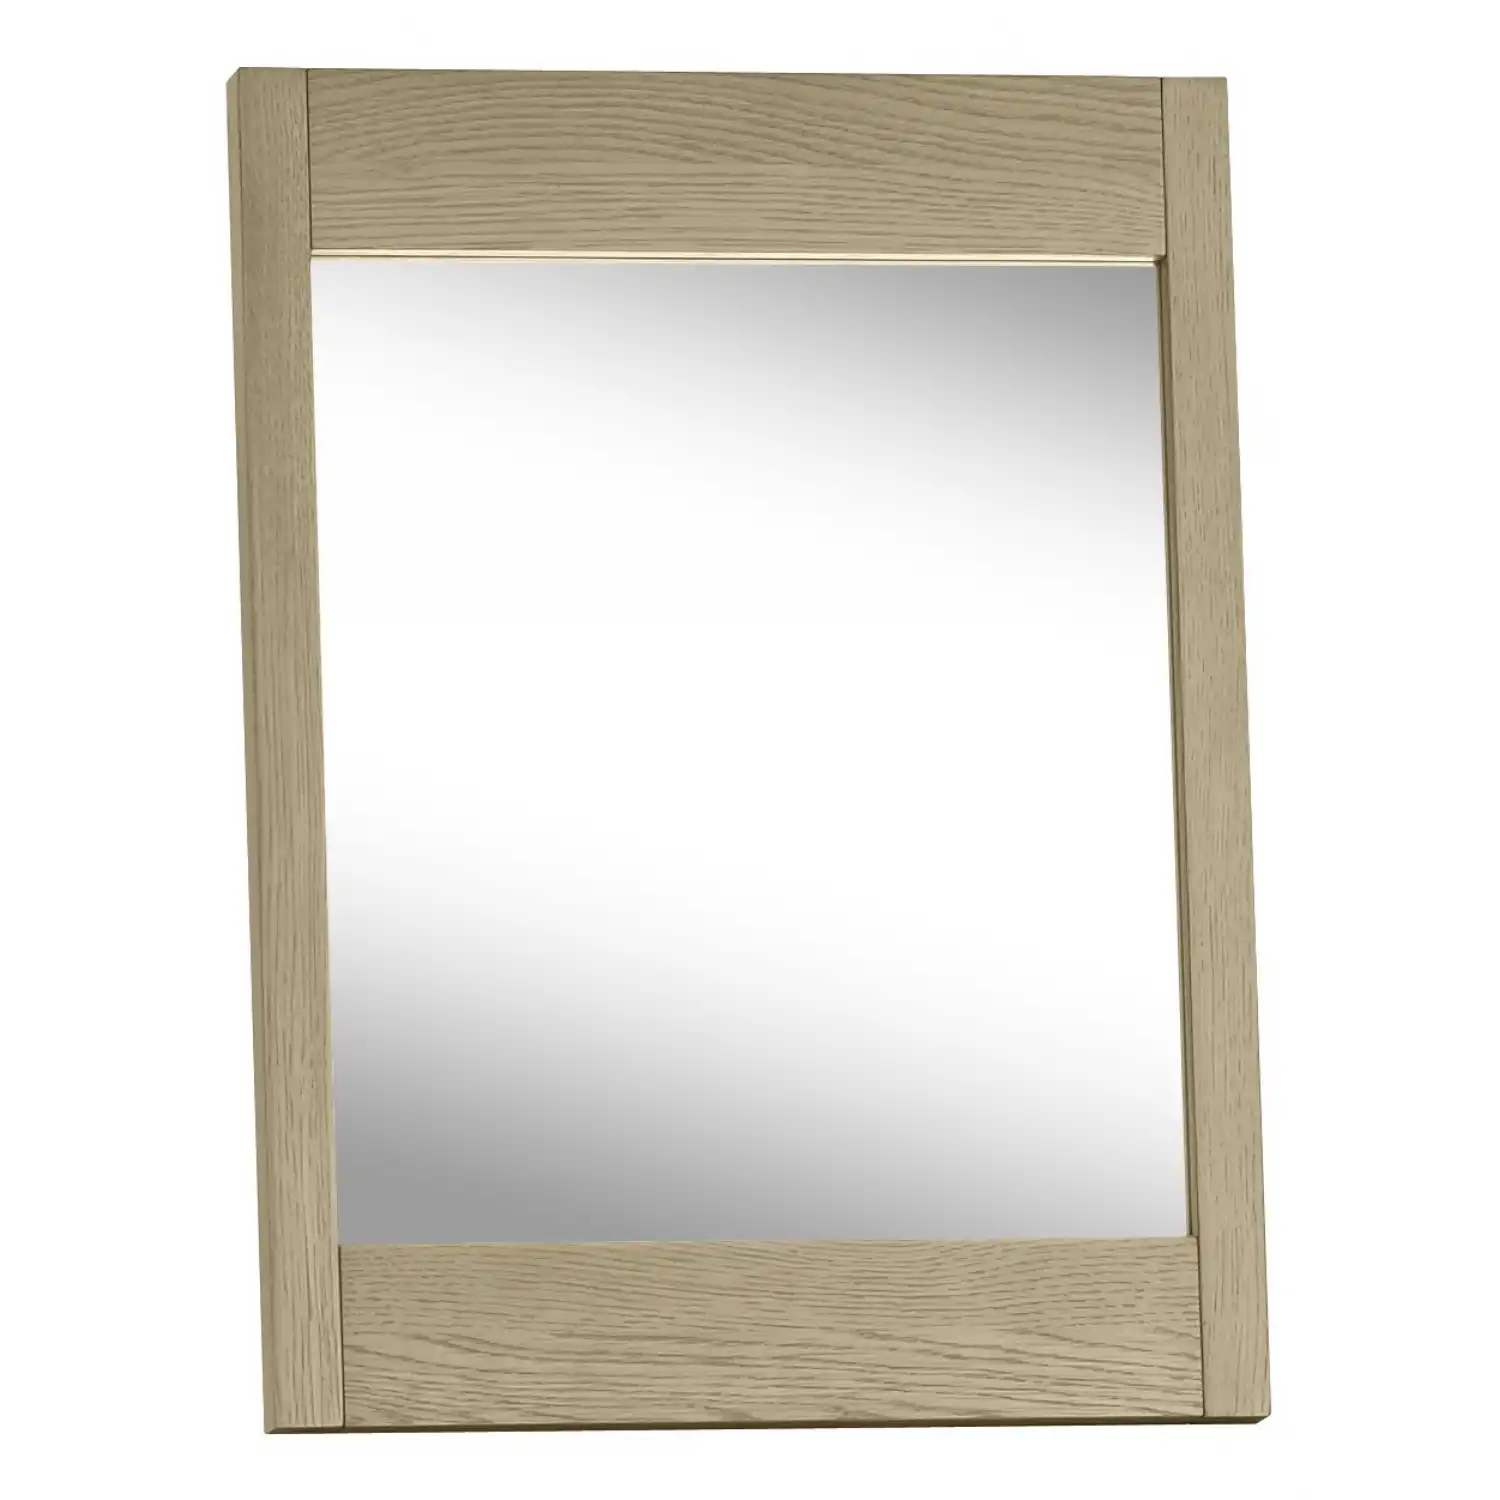 Weathered Oak Rectangular Dressing Table Vanity Mirror